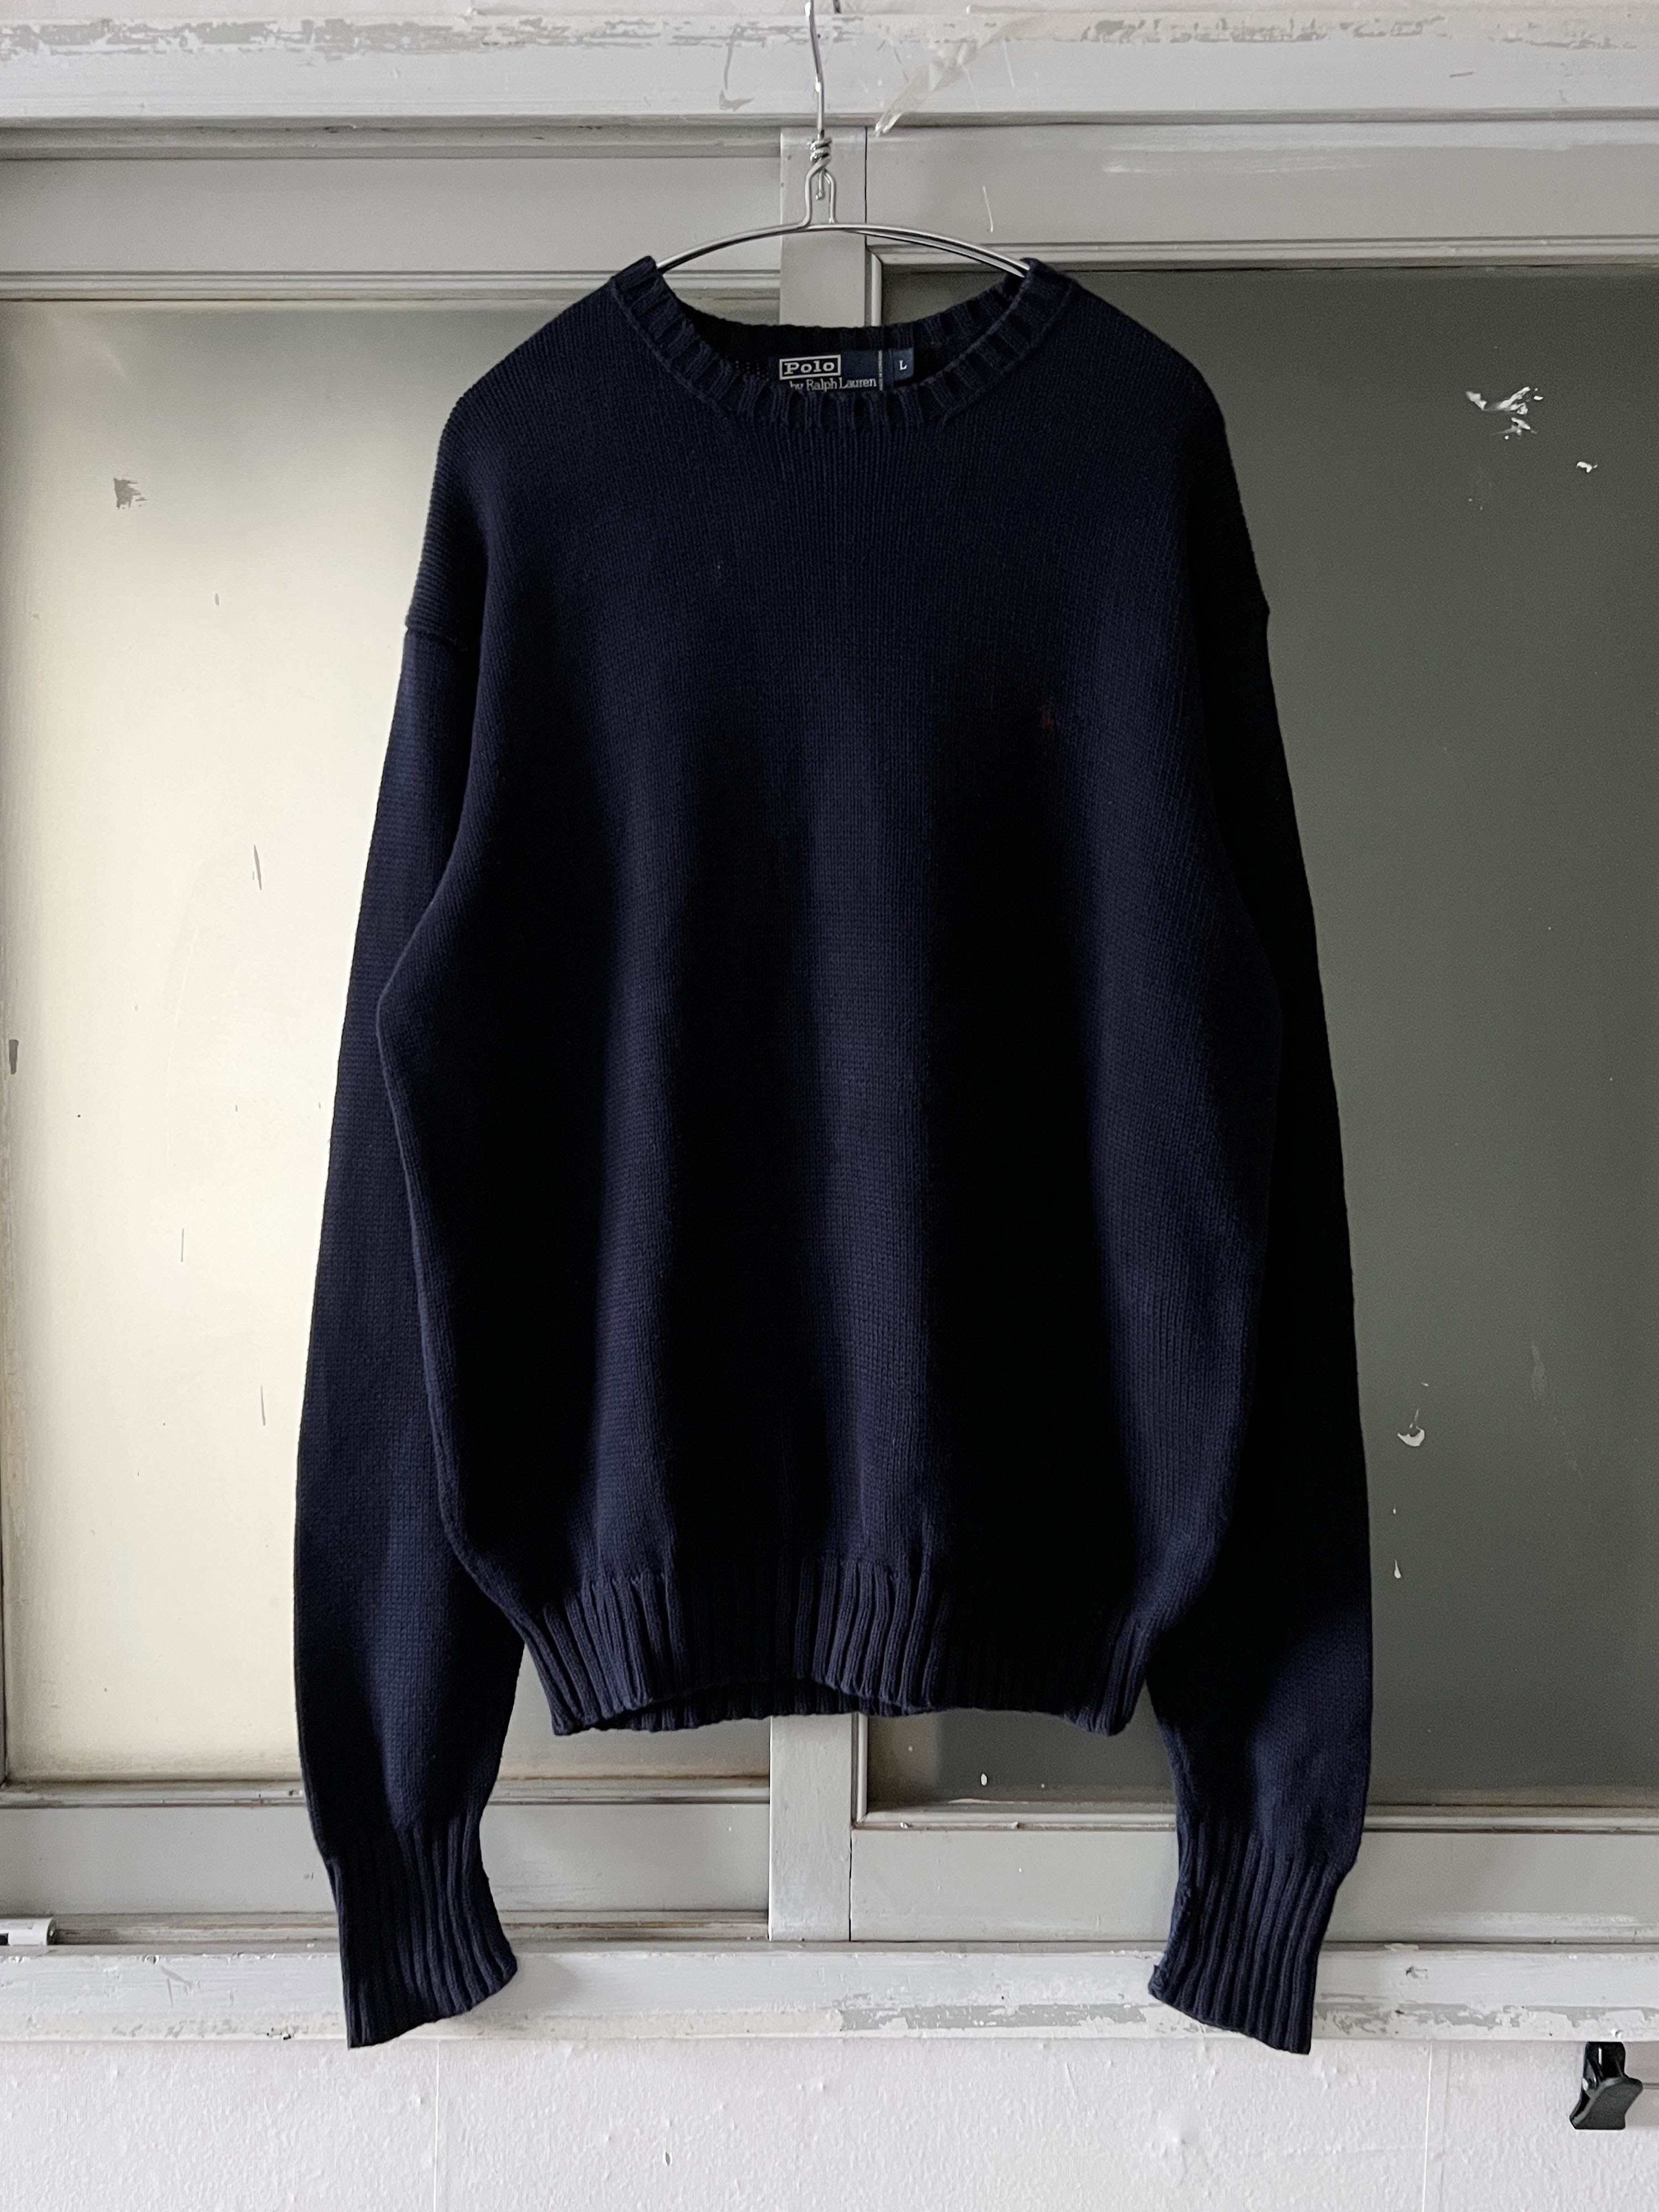 Polo by Ralph Lauren cotton knit